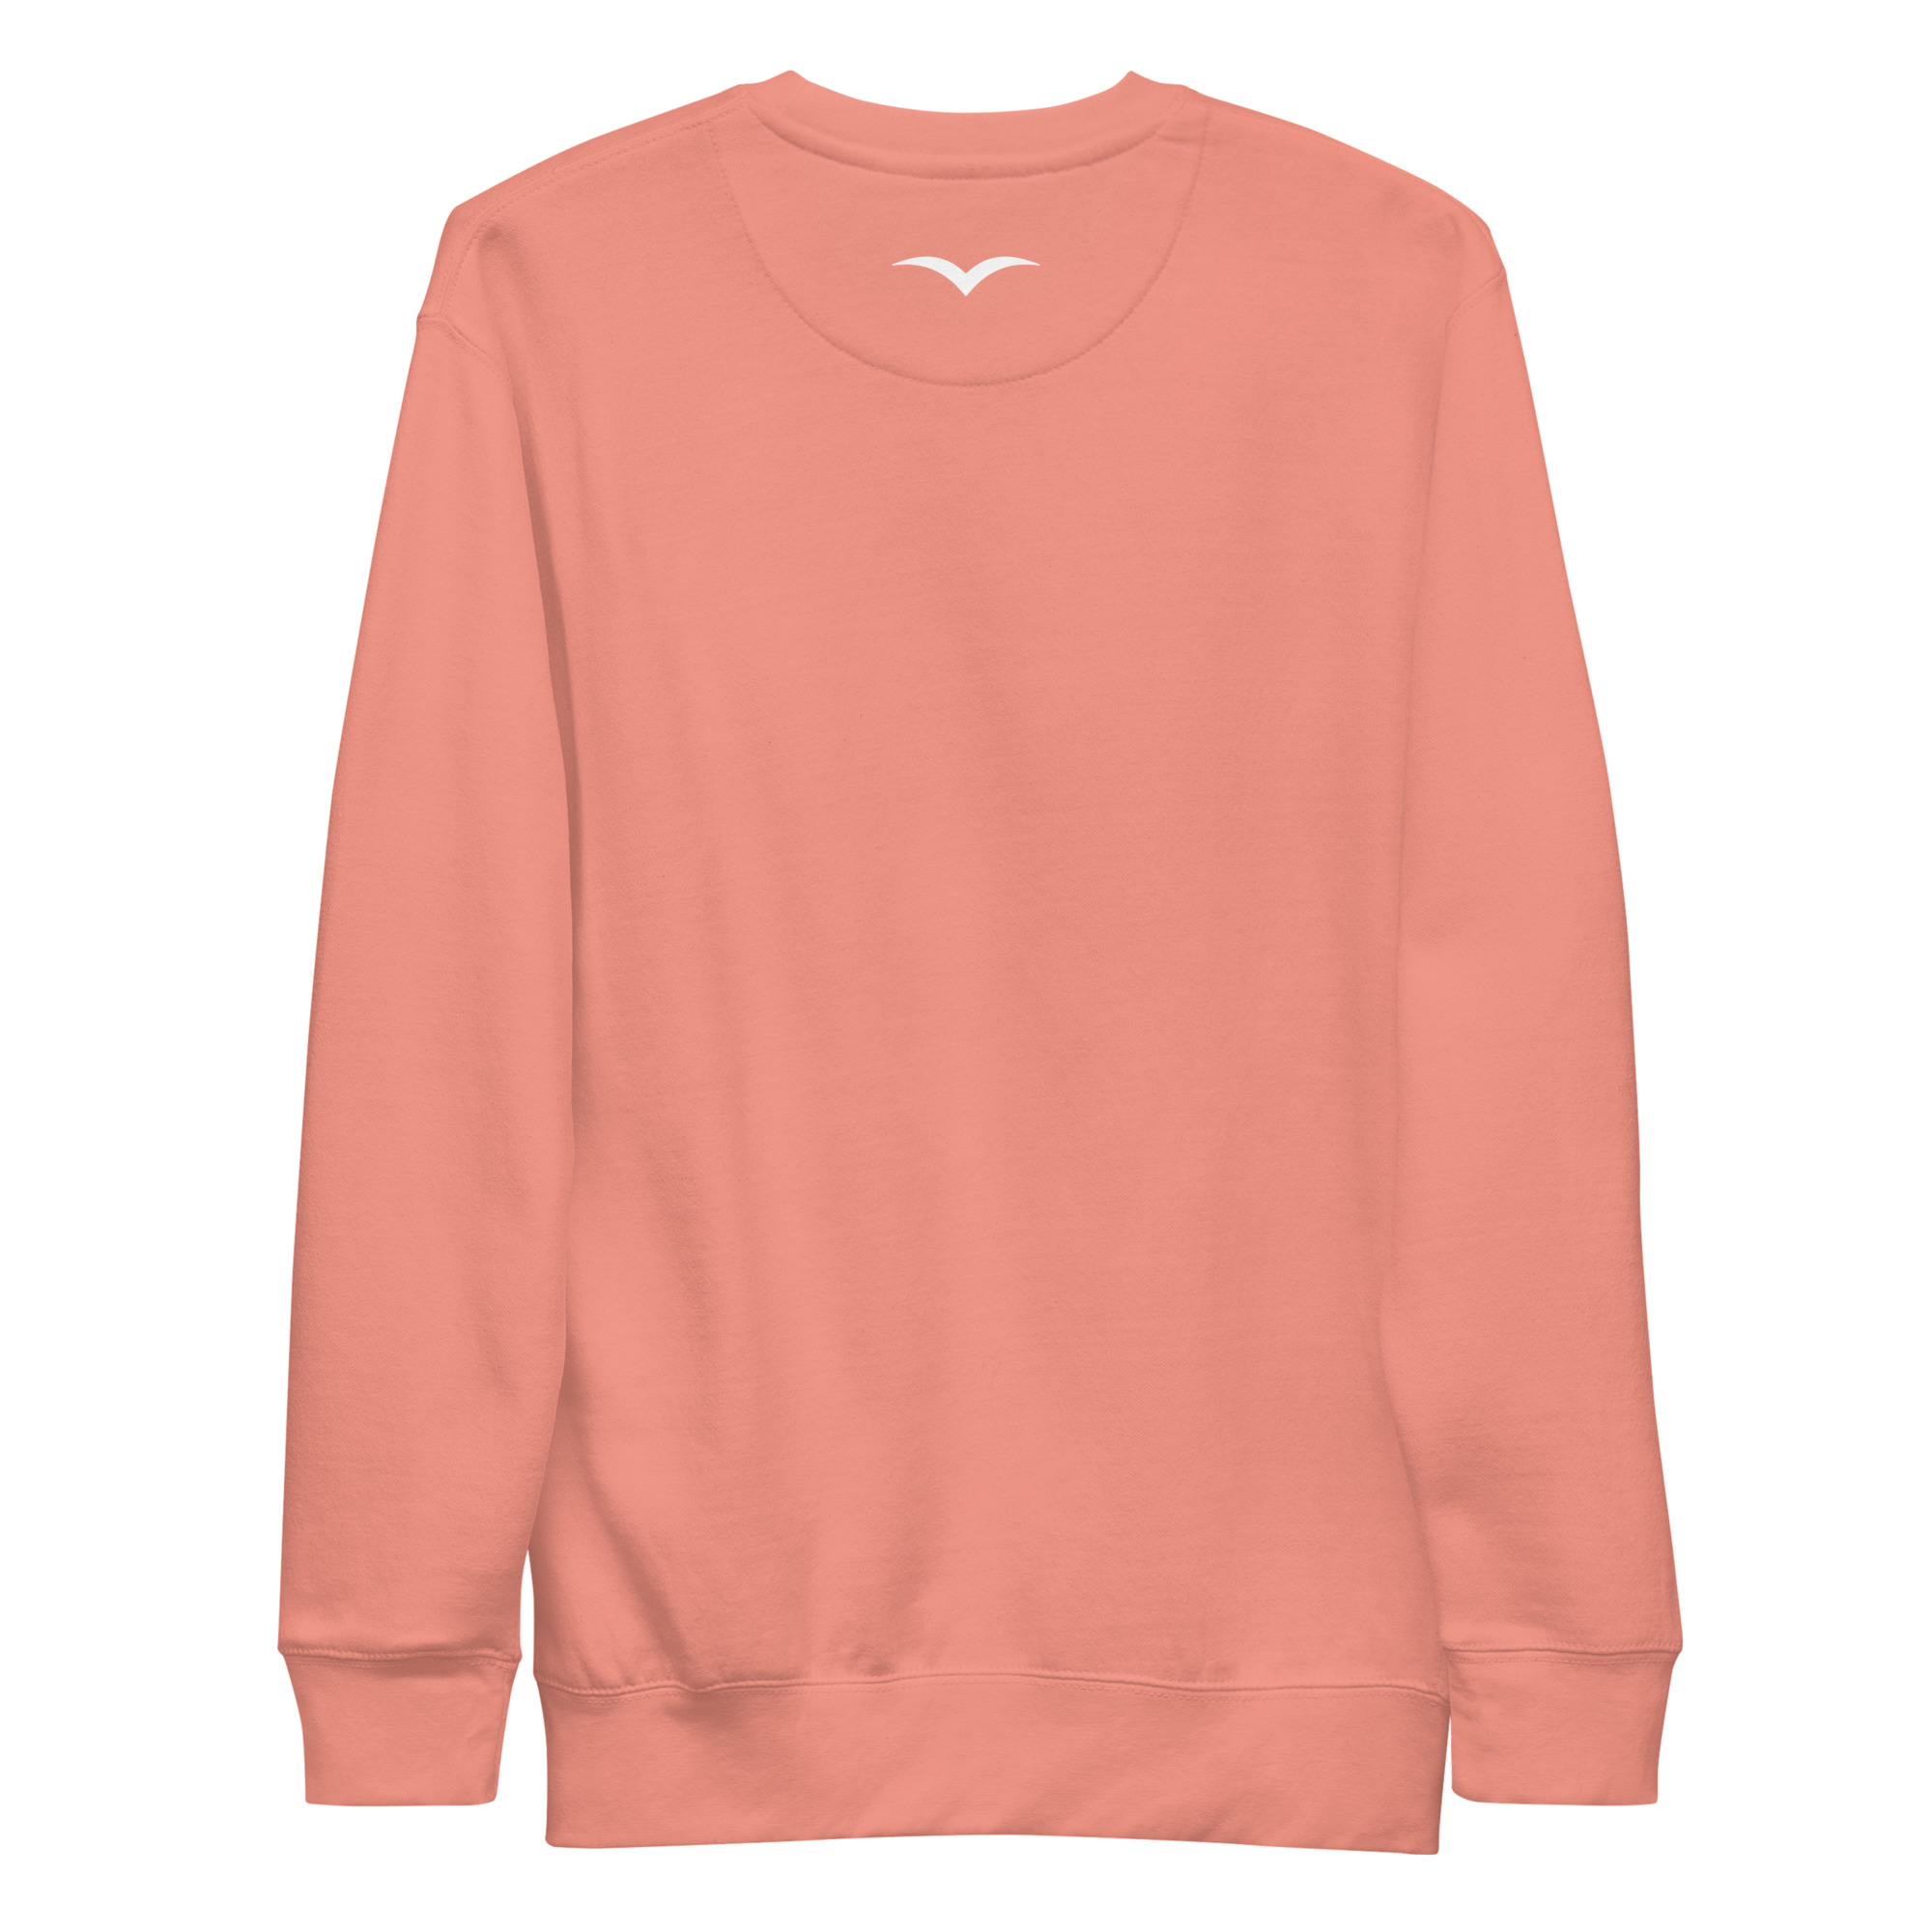 unisex-premium-sweatshirt-dusty-rose-back-6410f2cc42343.jpg